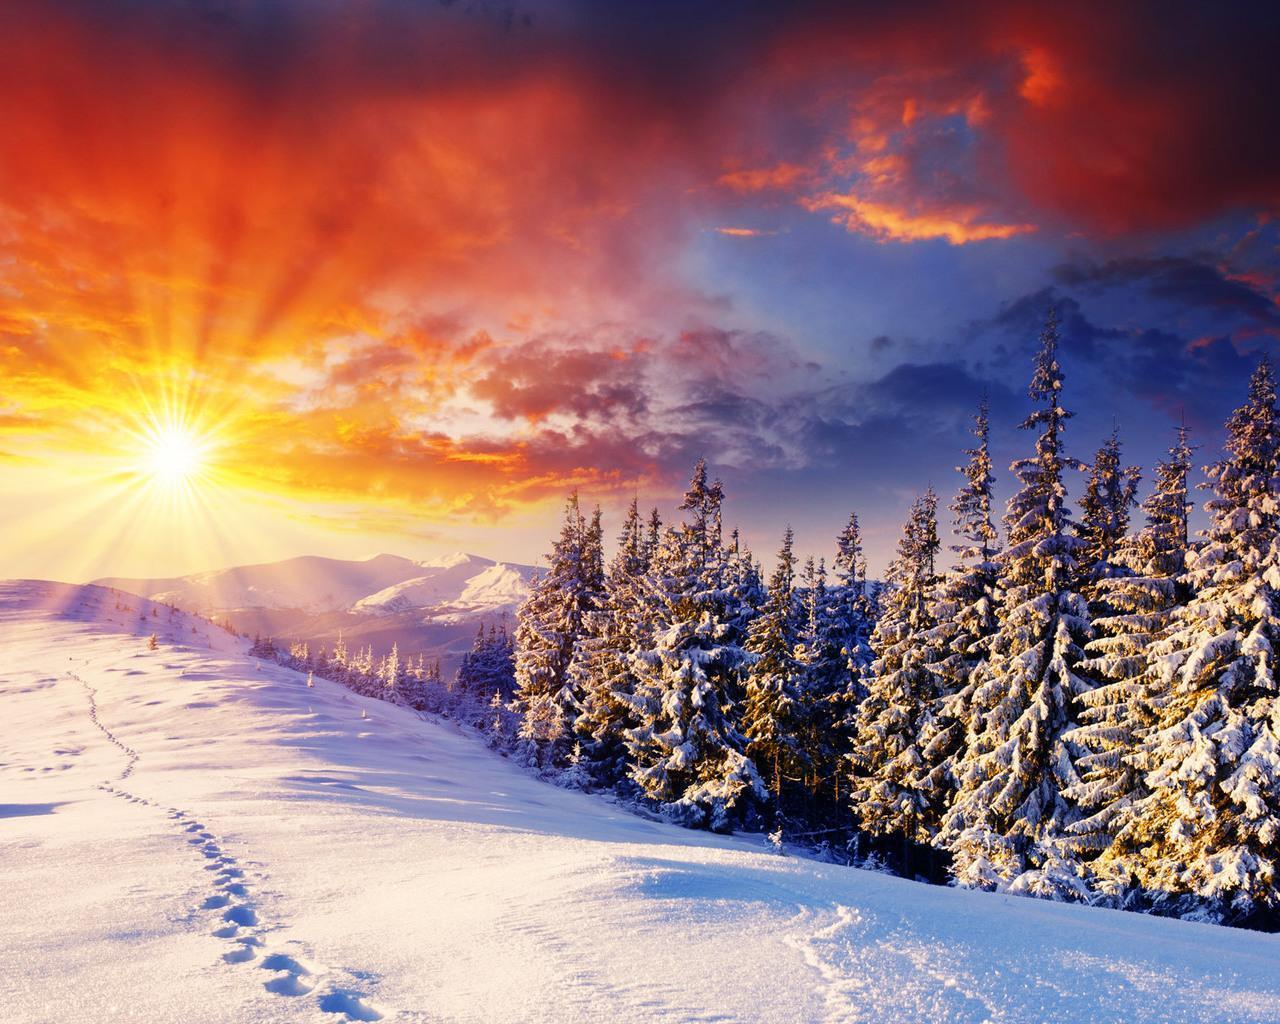 Free download Sunny Winter Day wallpaper ForWallpapercom